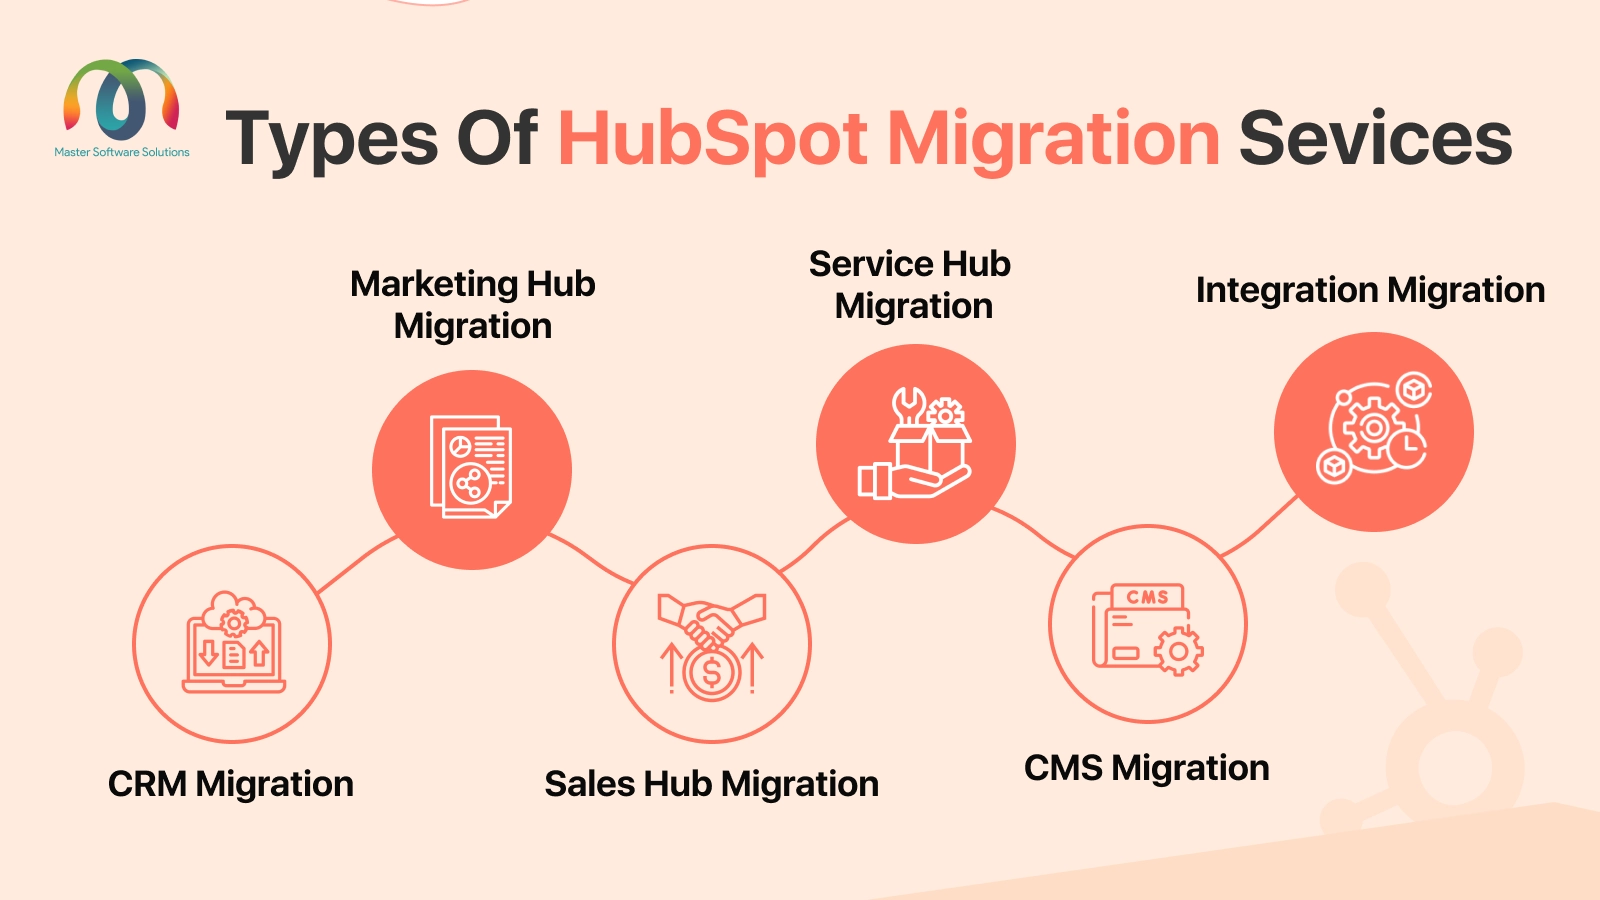 ravi garg, mss, benefits, hubspot migration, types, crm migration, marketing hub migration, sales hub migration, service hub migration, cms migration, integration migration